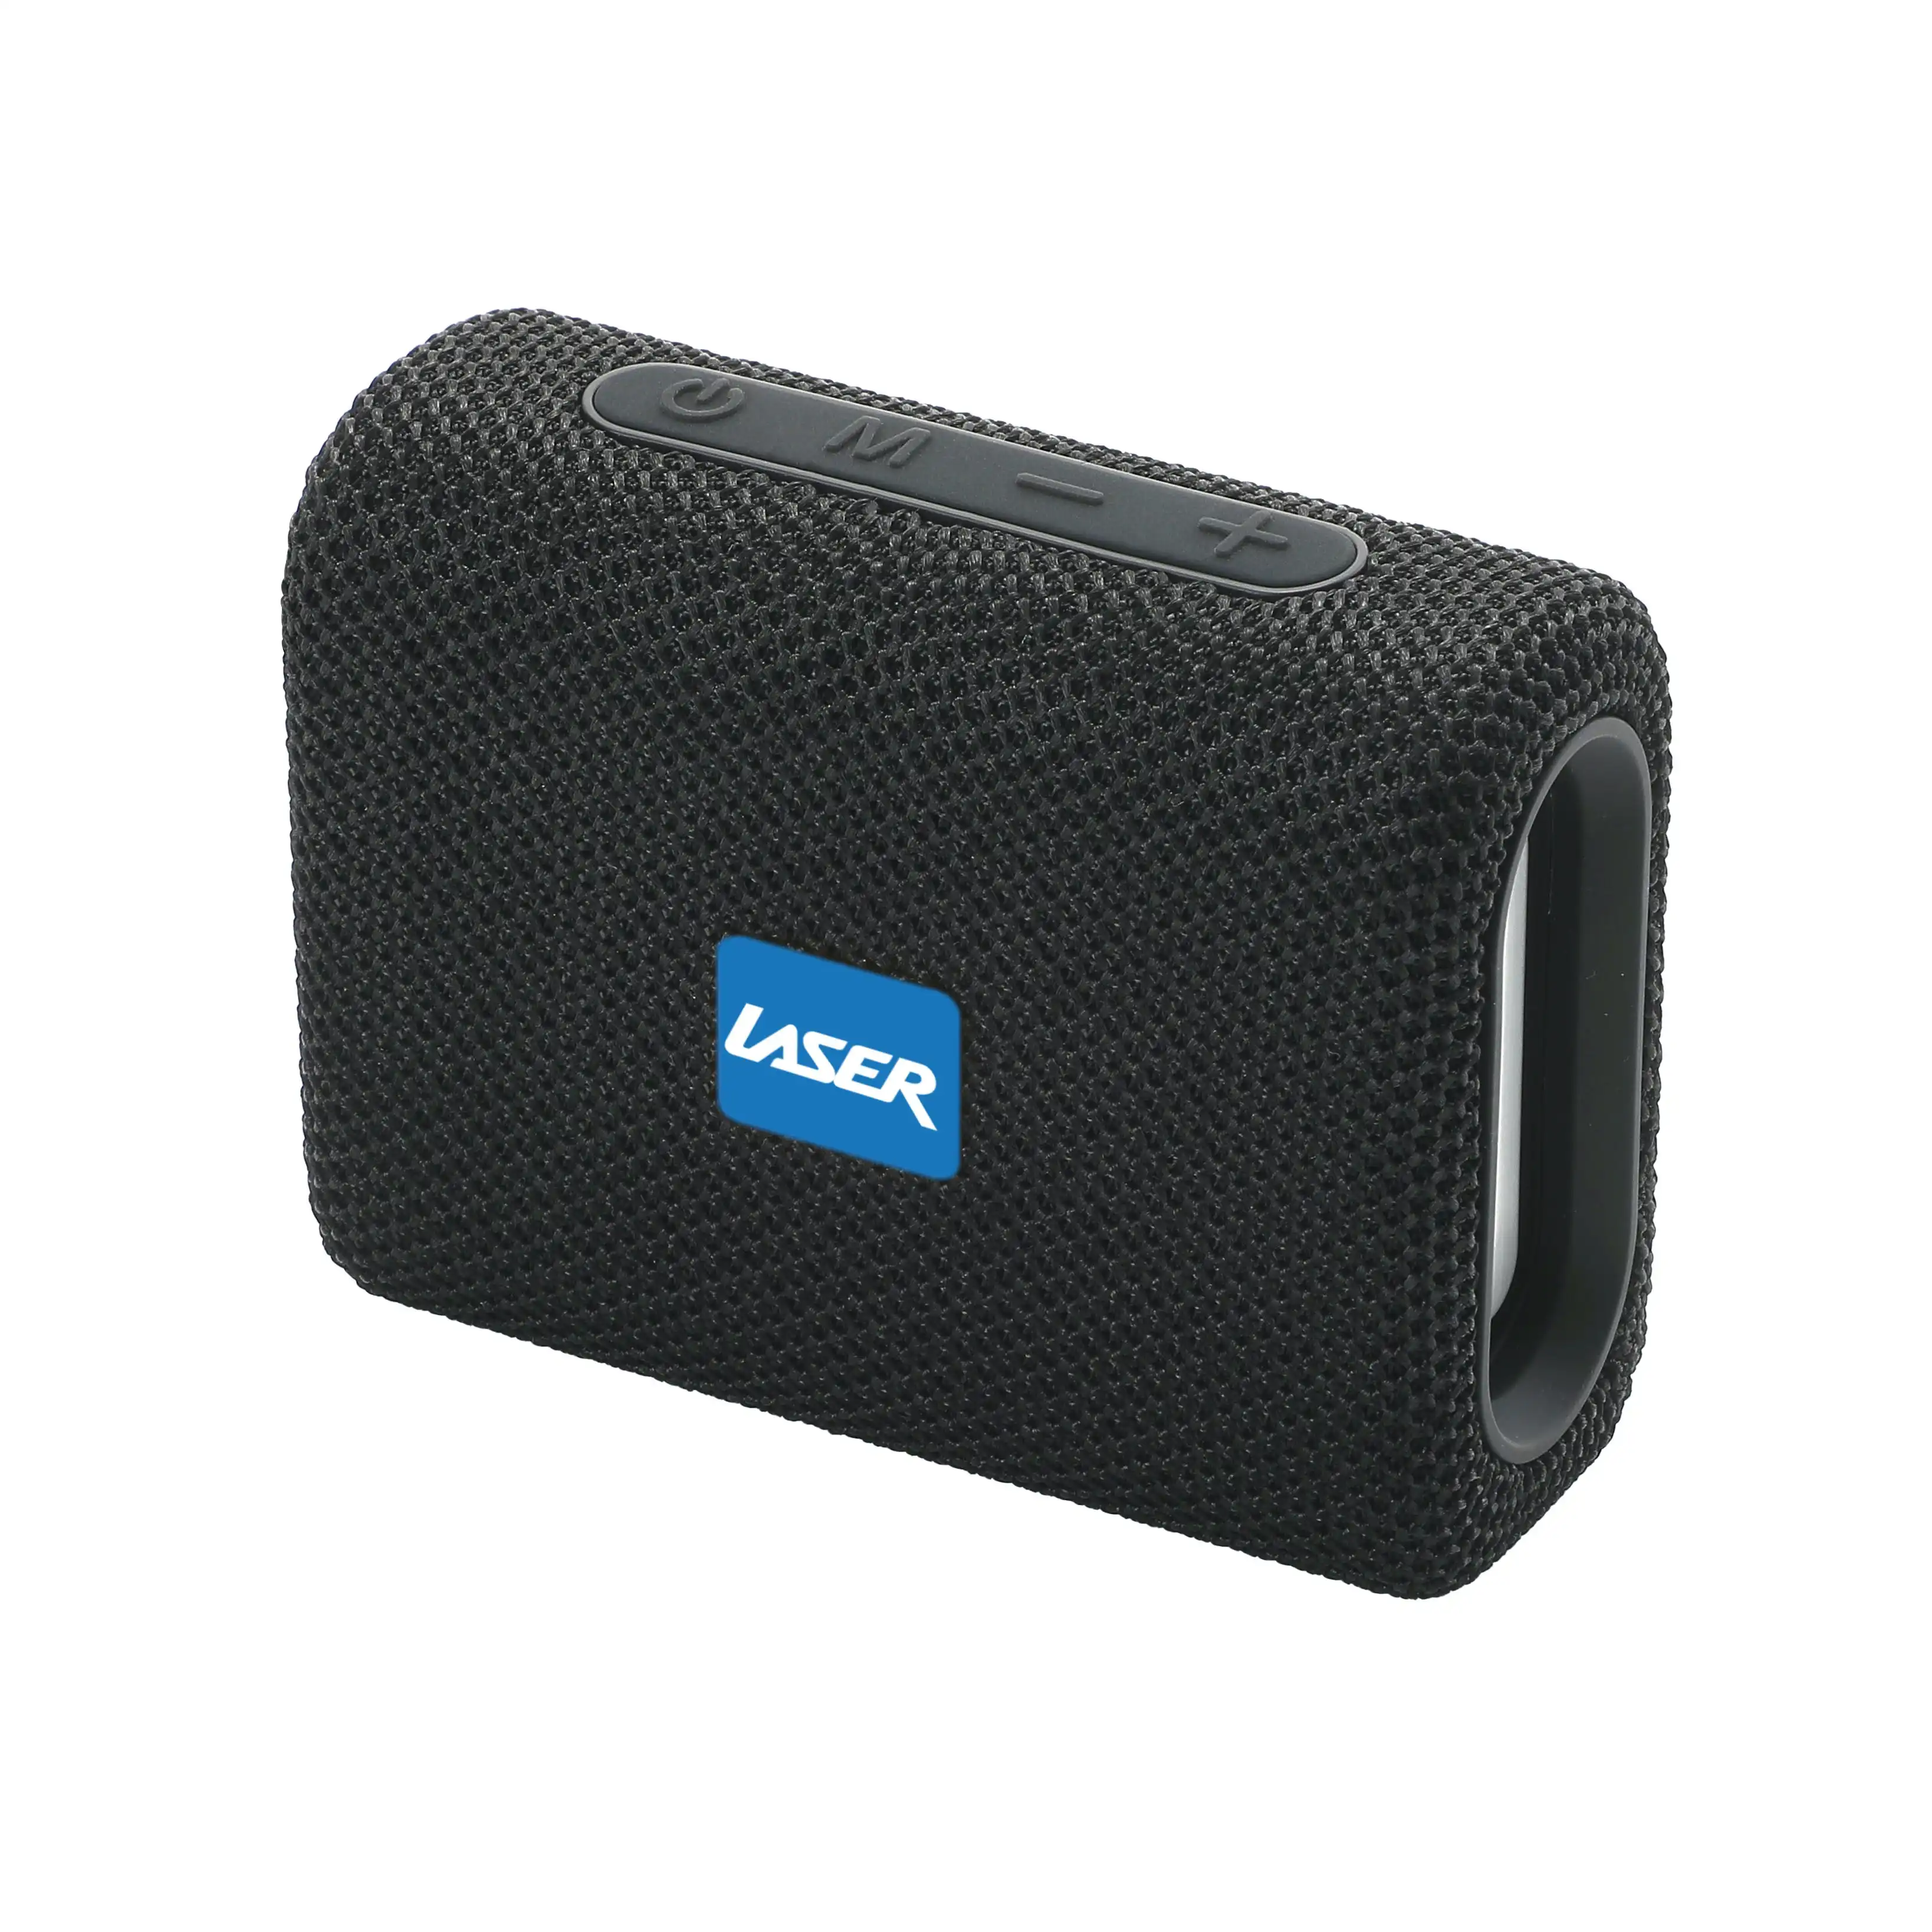 Laser Portable Wireless Speaker Black, FM, Bluetooth, Mic, Water Resistant